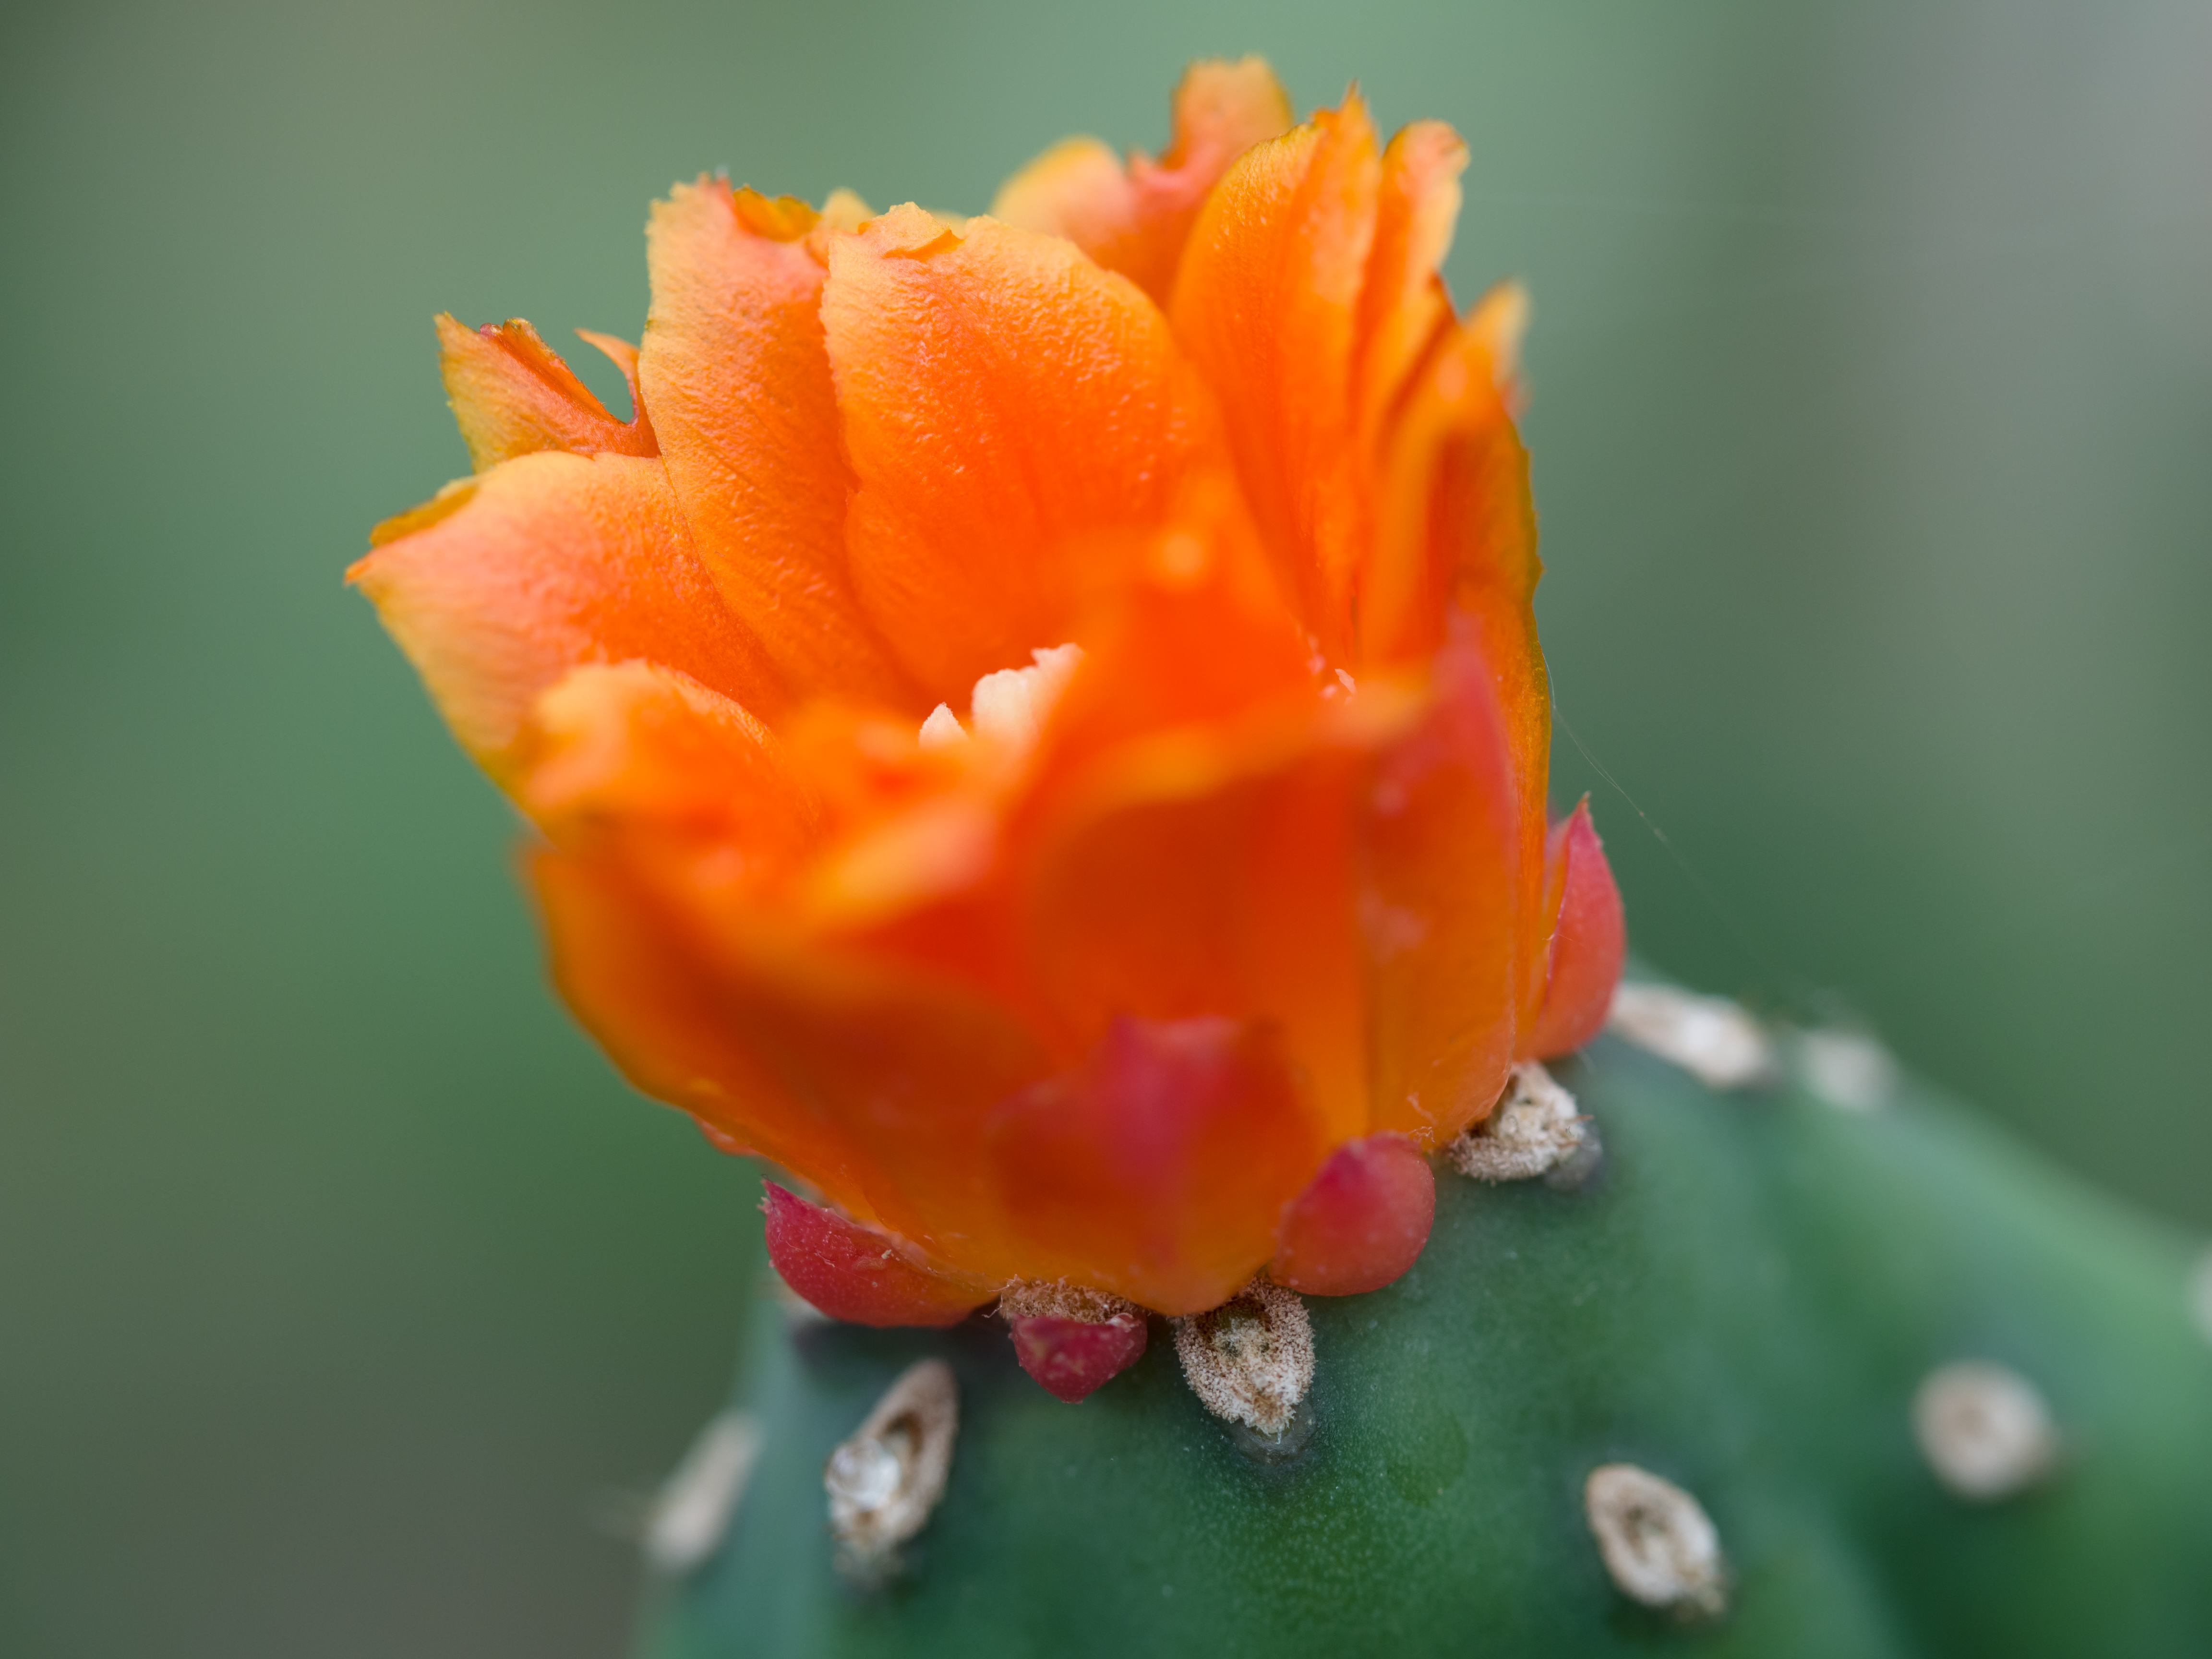 File:Orange cactus flower (14932628621).jpg - Wikimedia Commons